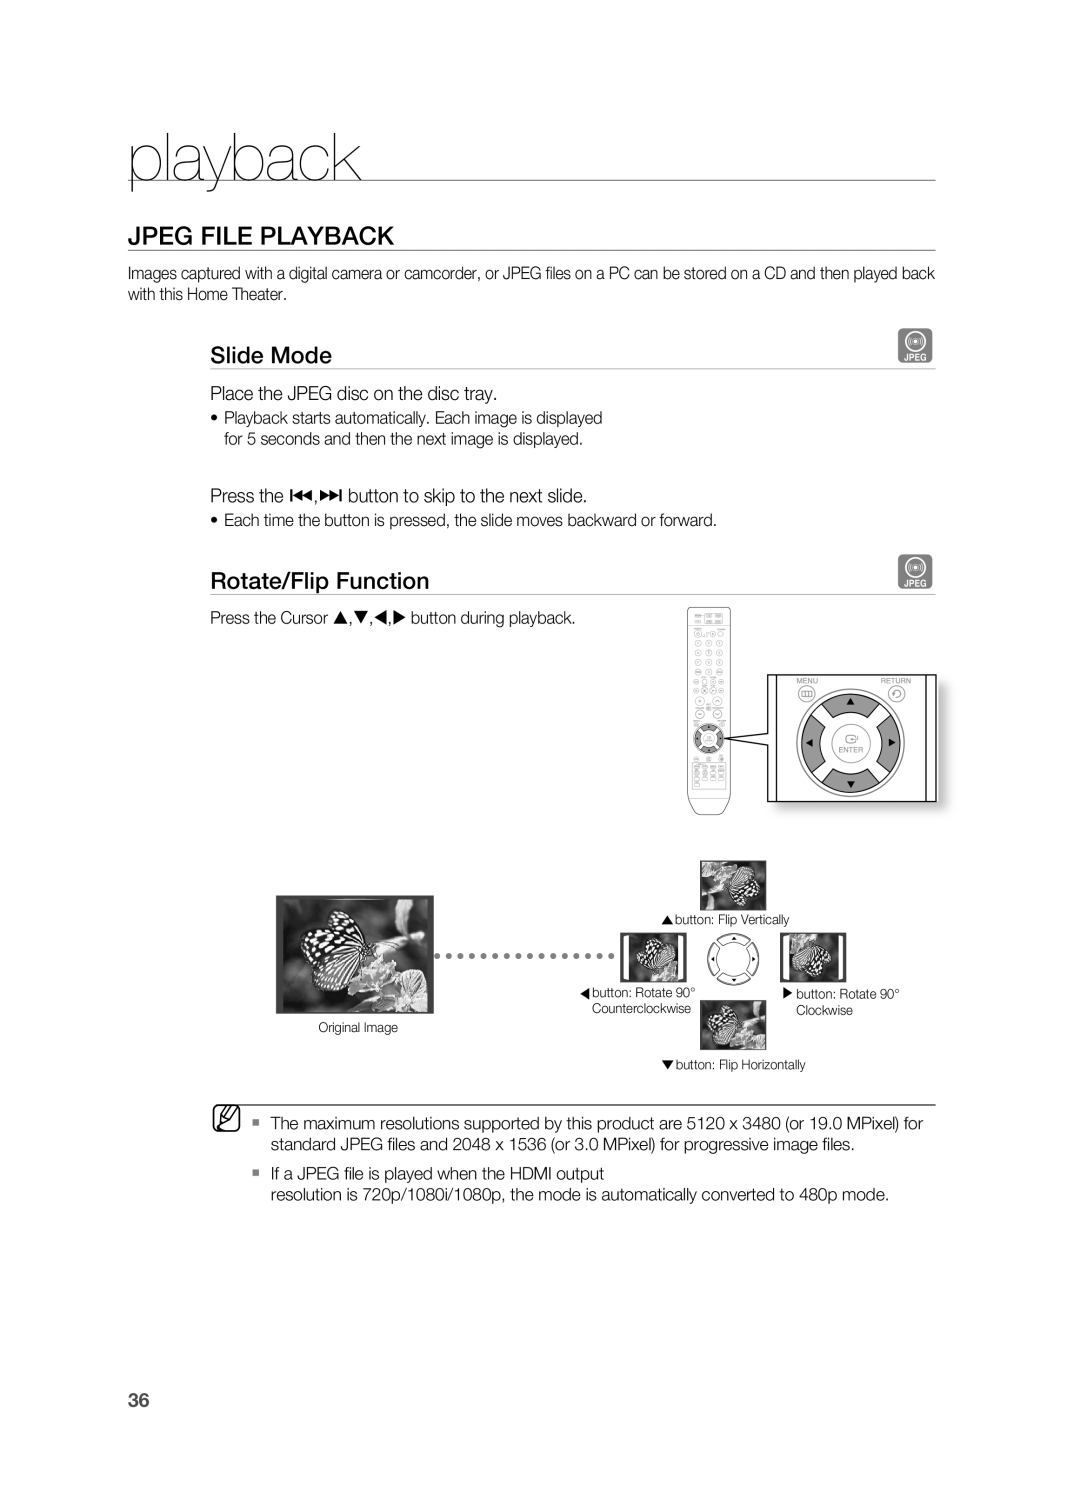 Samsung HT-TWZ315 manual JPEG fiLE PLAyBACK, Slide mode, rotate/flip function, playback 